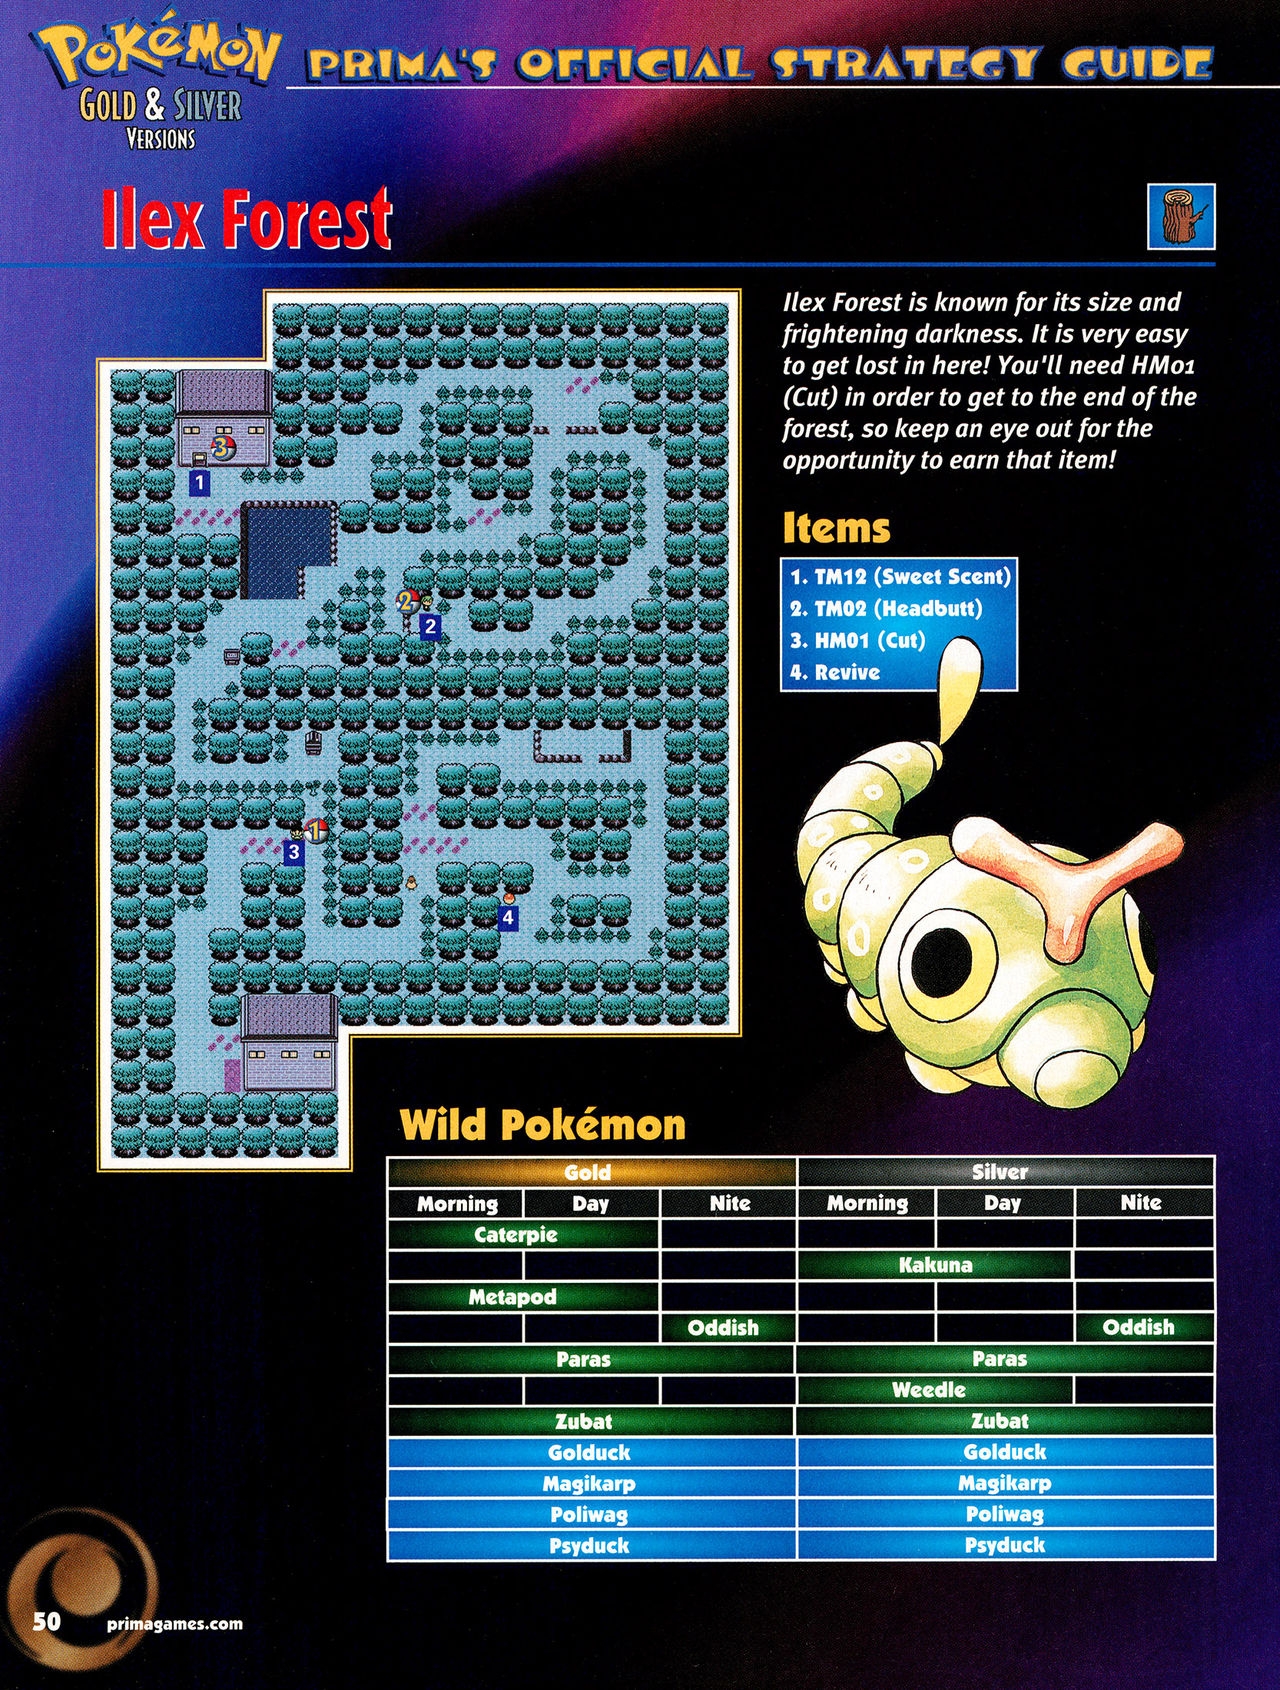 Pokémon Gold & Silver Versions - Strategy Guide 51